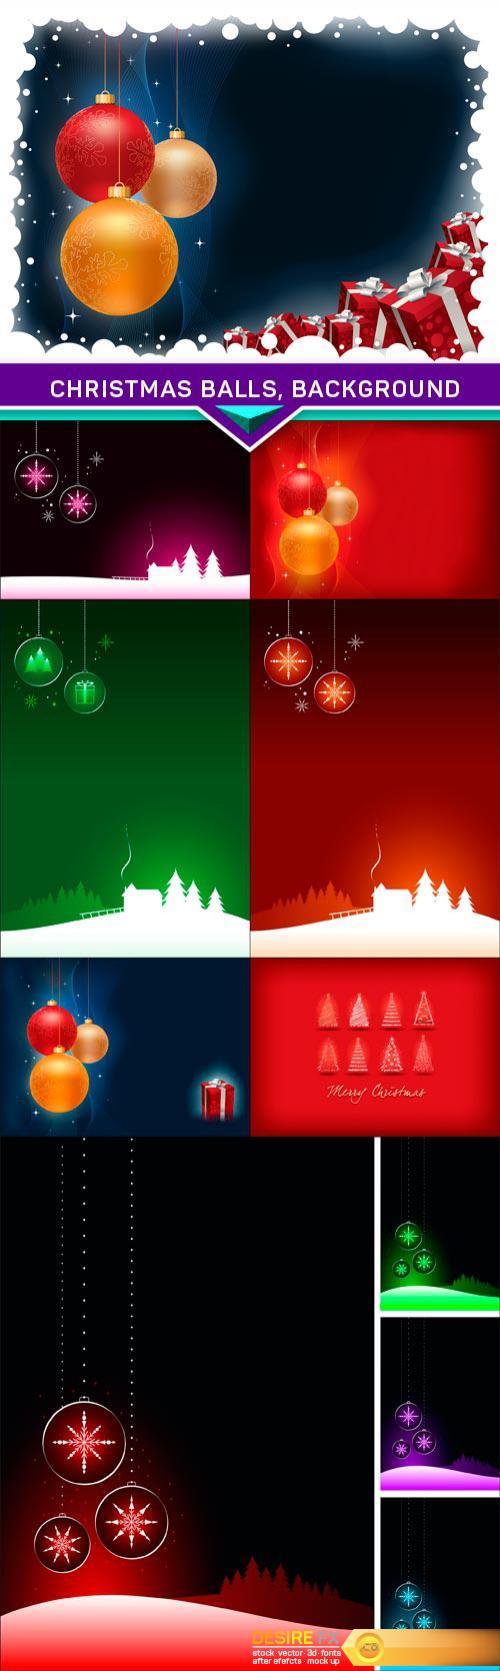 Christmas balls, background 8X JPEG